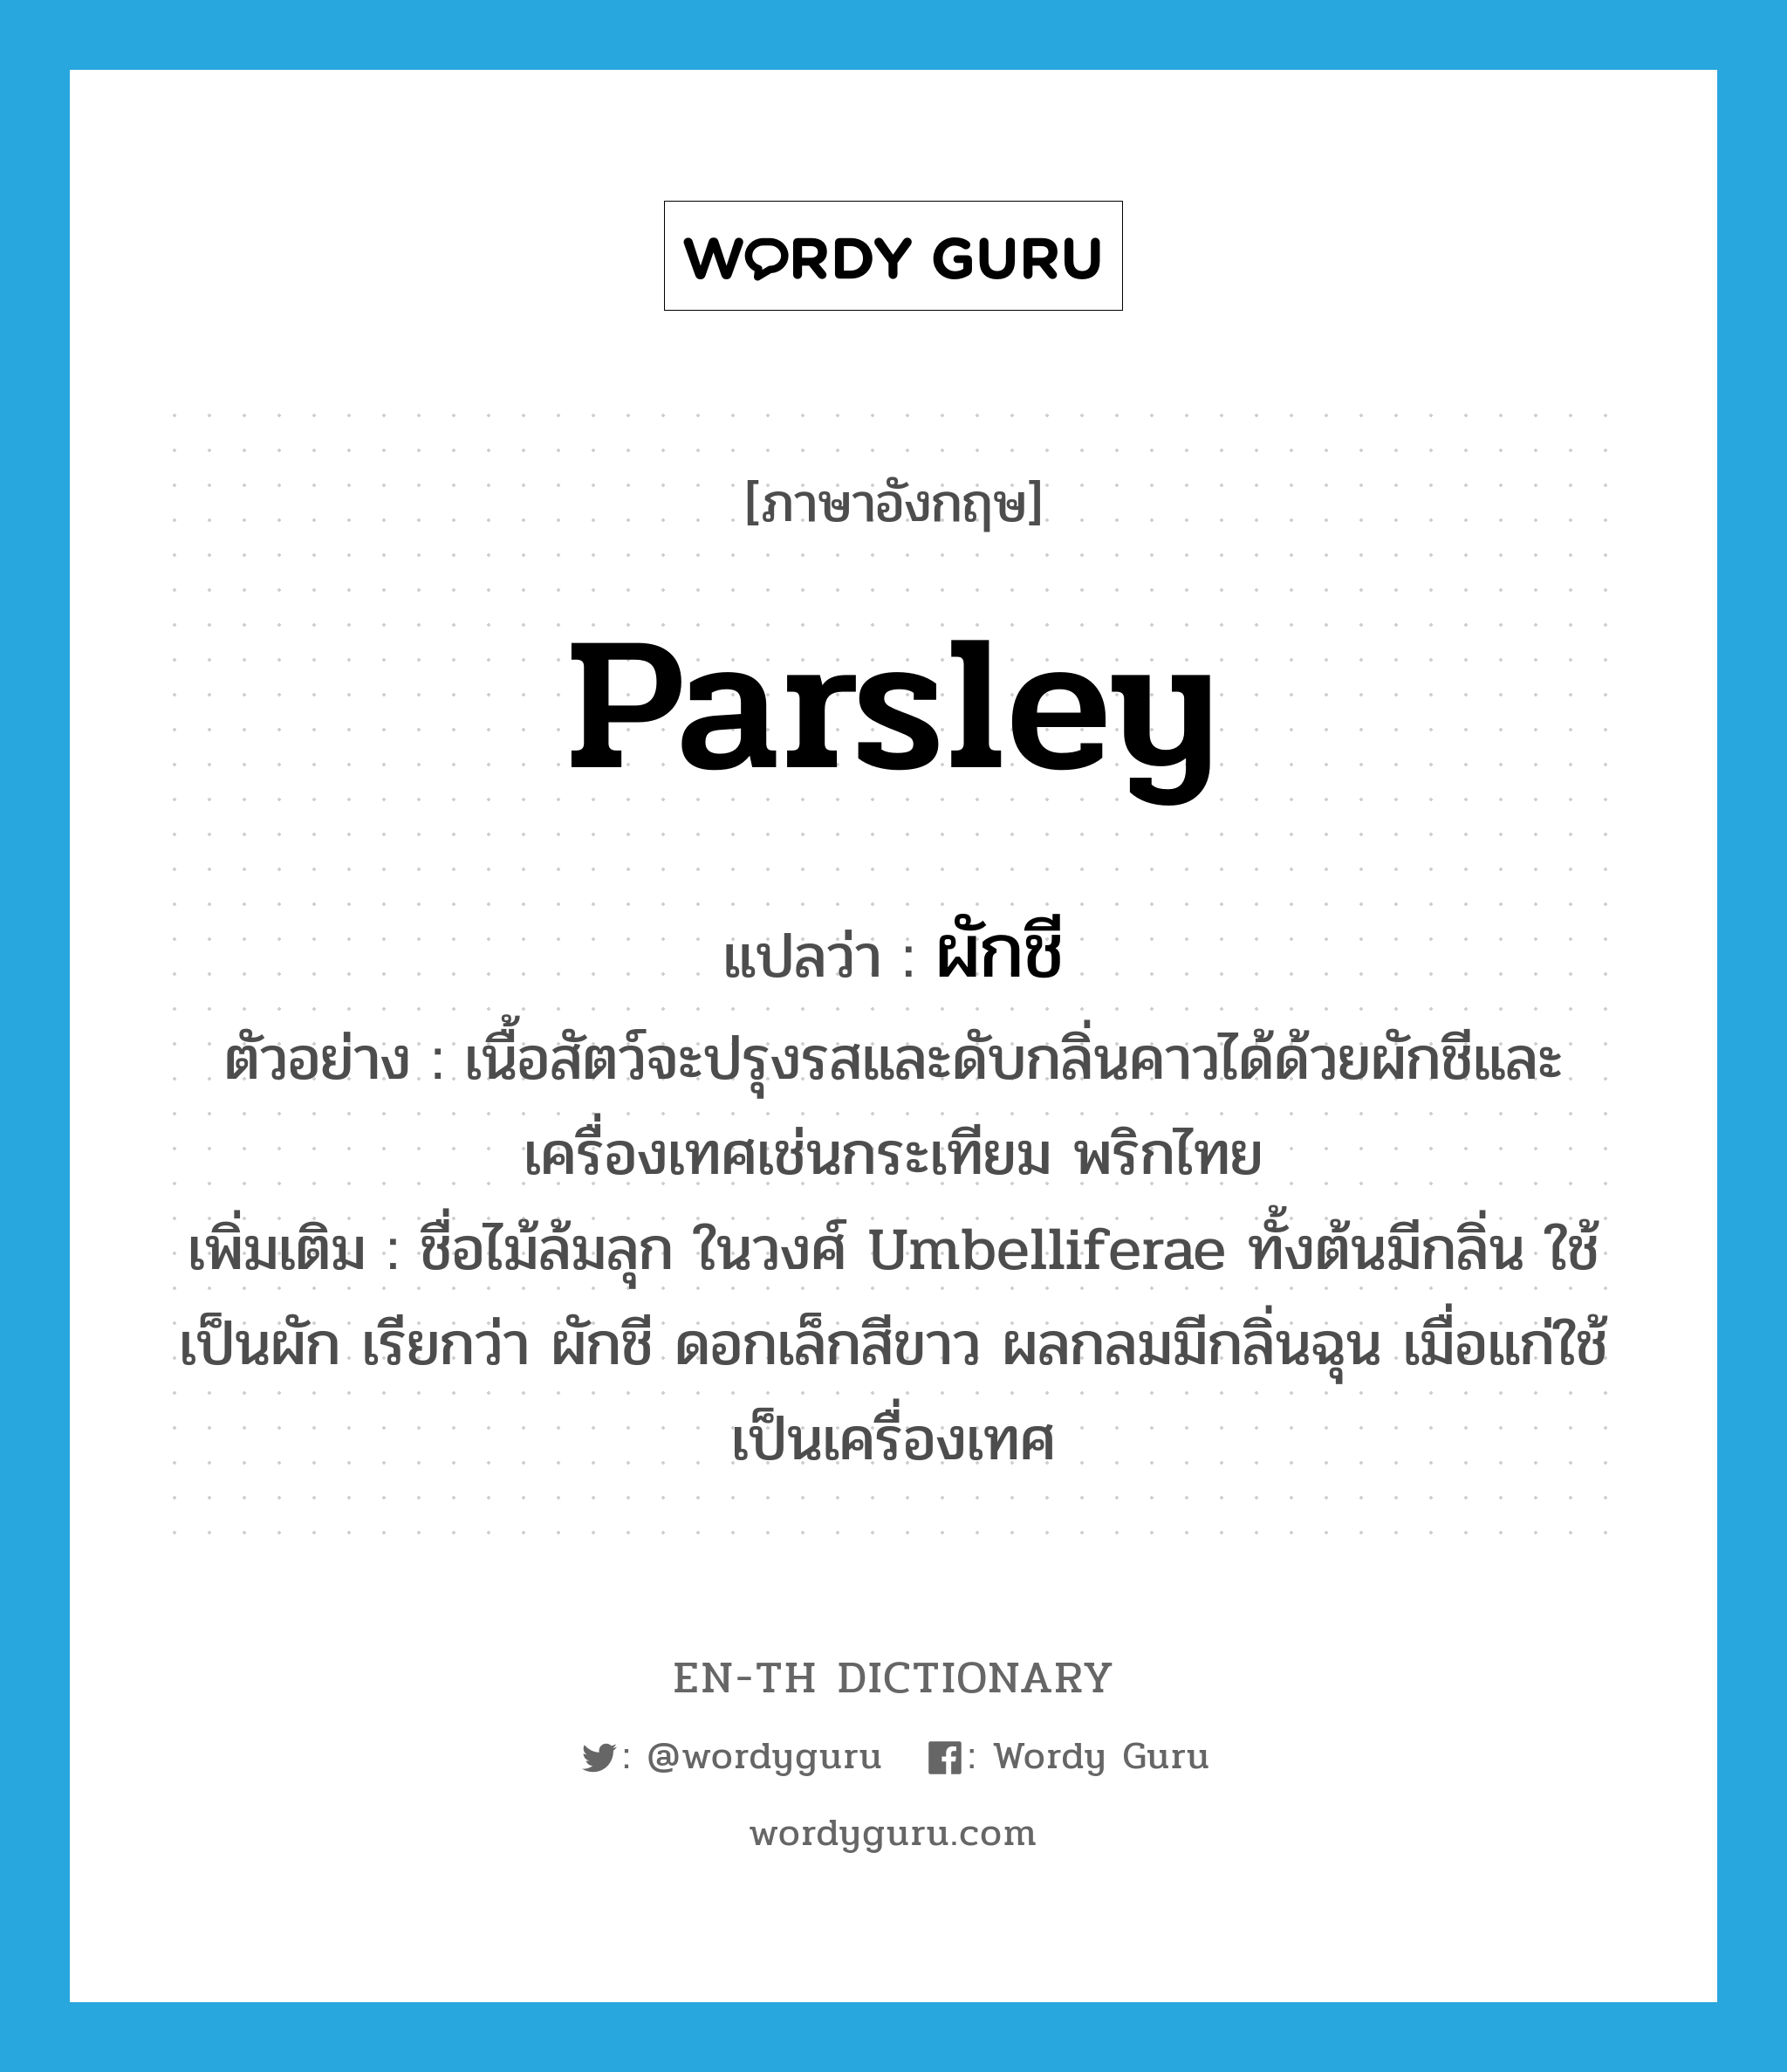 parsley แปลว่า?, คำศัพท์ภาษาอังกฤษ parsley แปลว่า ผักชี ประเภท N ตัวอย่าง เนื้อสัตว์จะปรุงรสและดับกลิ่นคาวได้ด้วยผักชีและเครื่องเทศเช่นกระเทียม พริกไทย เพิ่มเติม ชื่อไม้ล้มลุก ในวงศ์ Umbelliferae ทั้งต้นมีกลิ่น ใช้เป็นผัก เรียกว่า ผักชี ดอกเล็กสีขาว ผลกลมมีกลิ่นฉุน เมื่อแก่ใช้เป็นเครื่องเทศ หมวด N